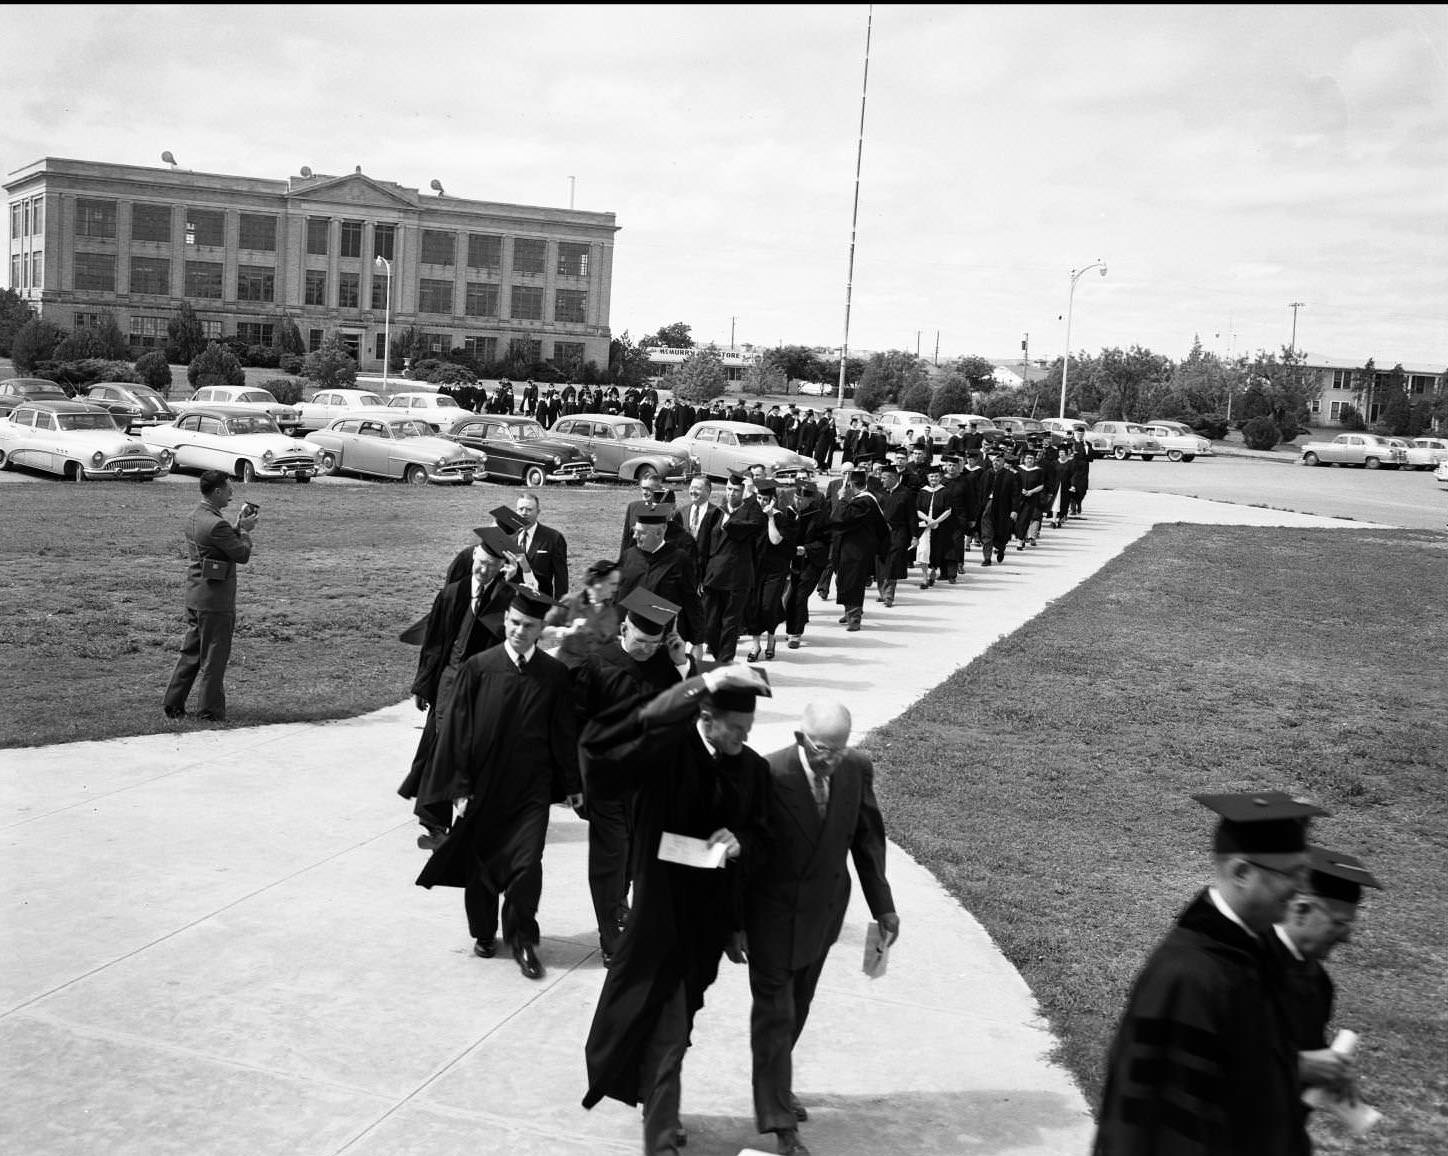 McMurry College Graduation, 1955